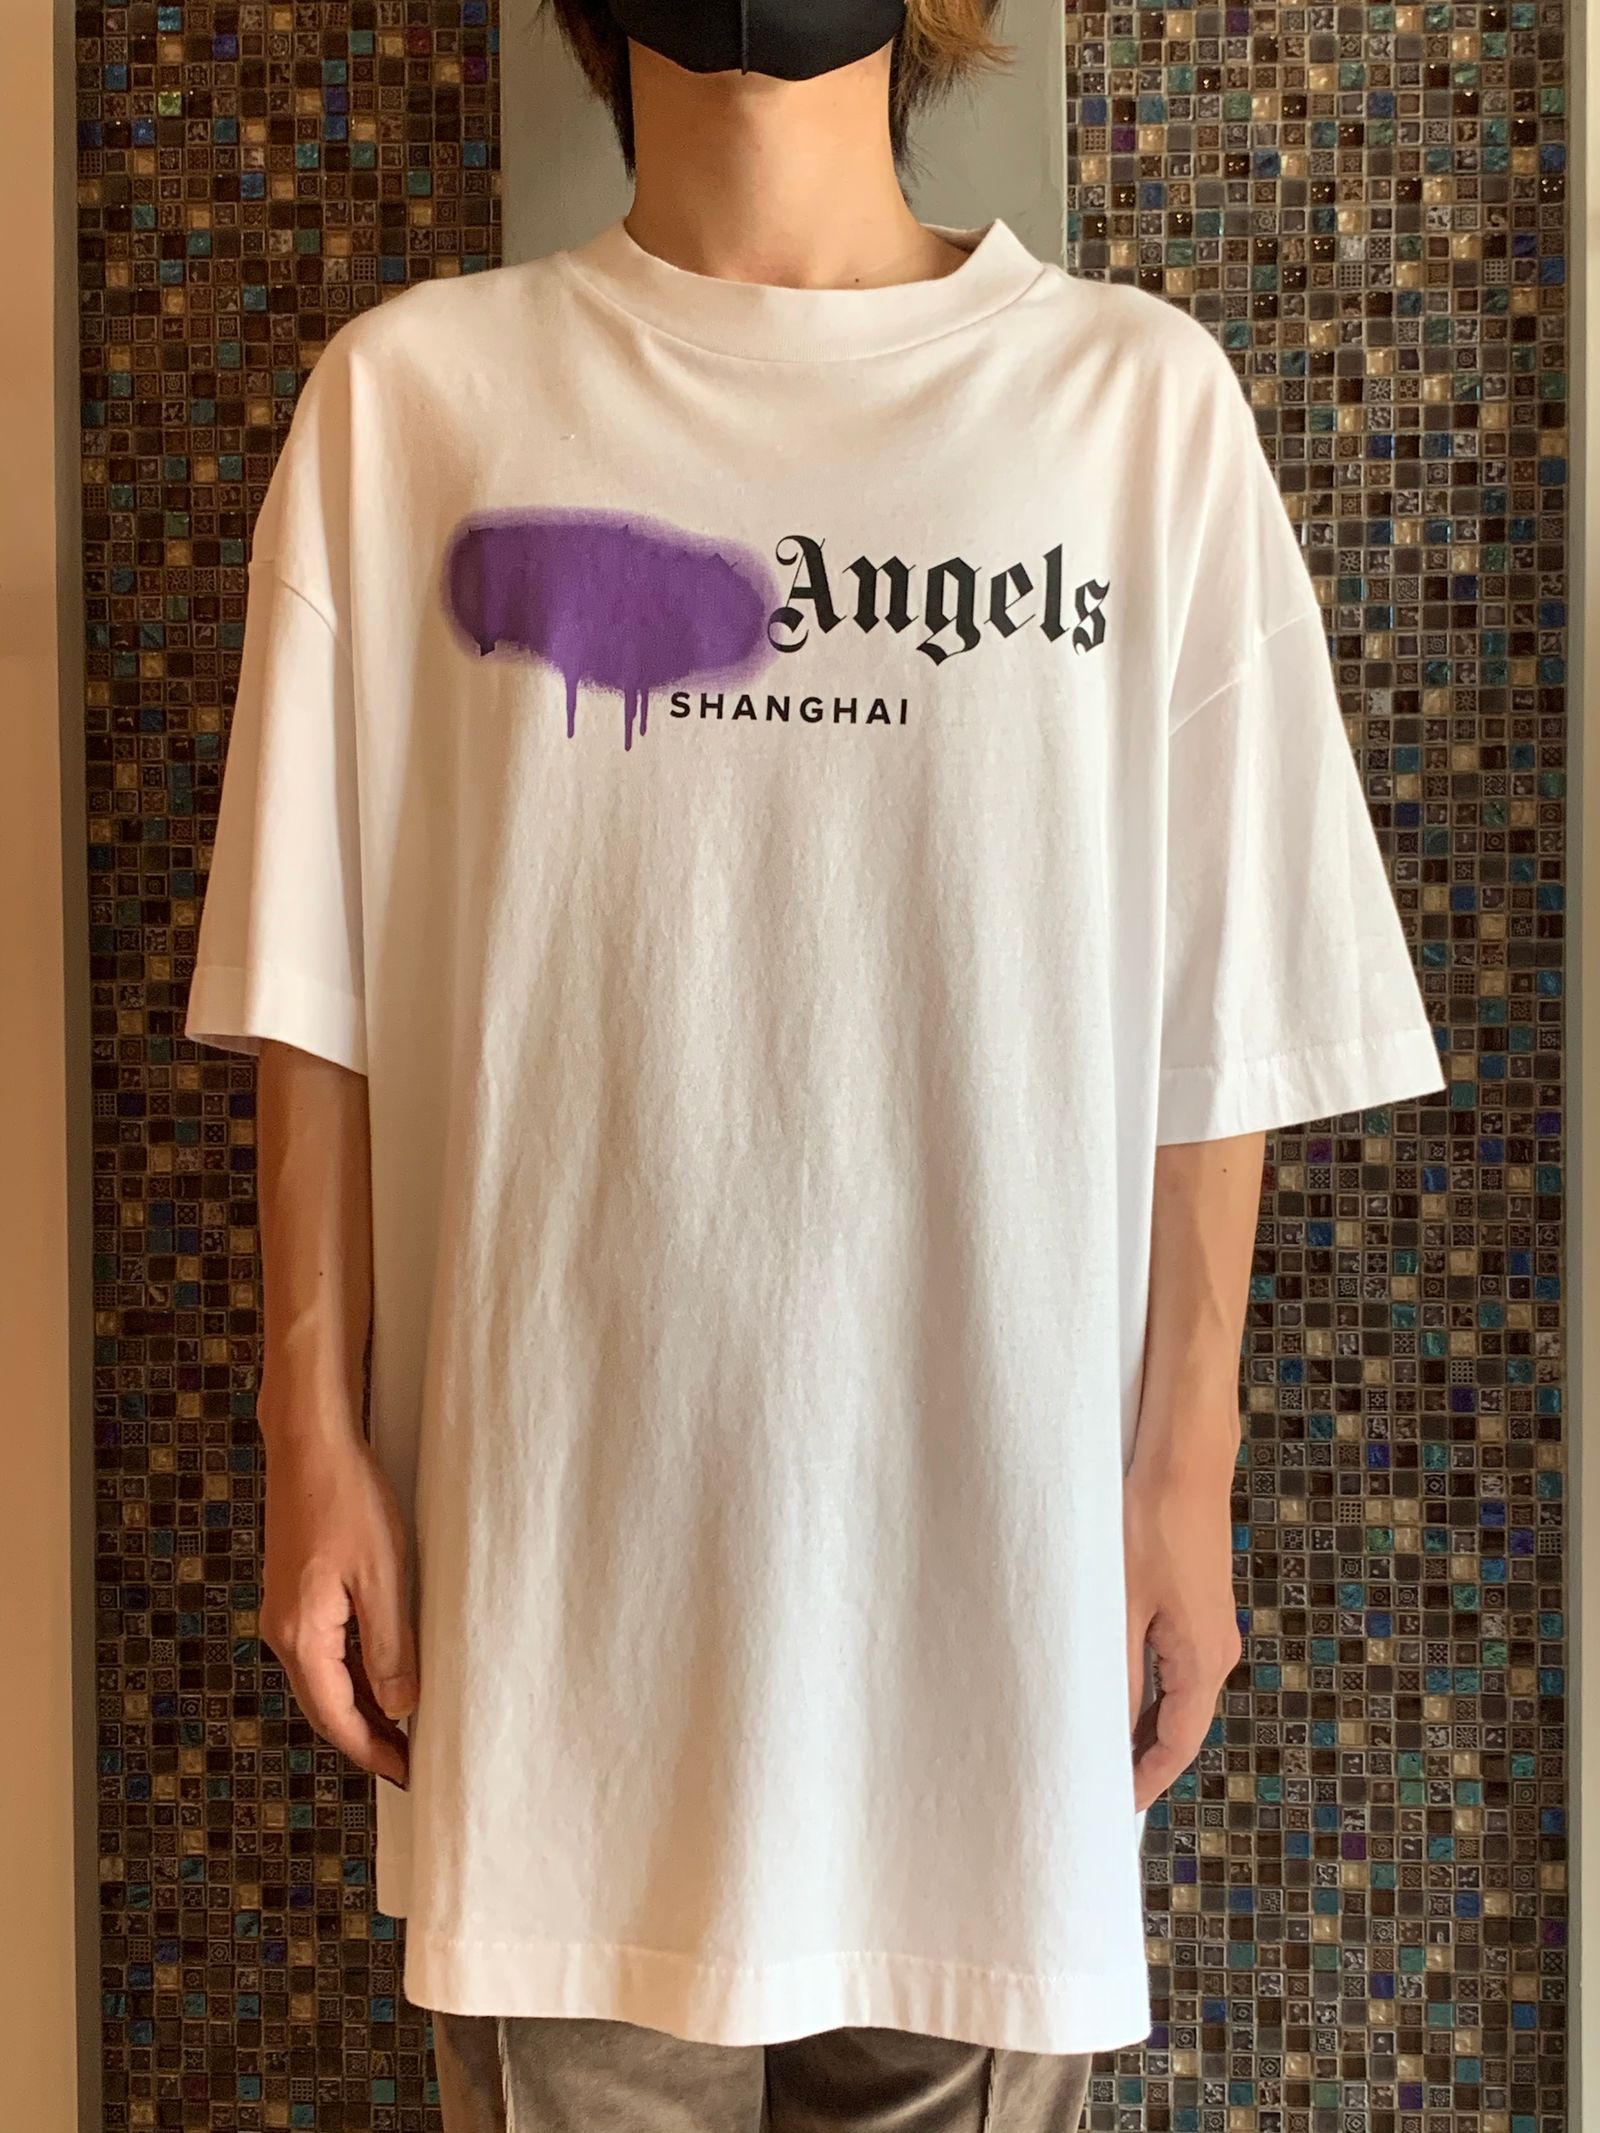 PALM ANGELS - 香港 スプレーペイント シティロゴ Tシャツ HONG KONG 